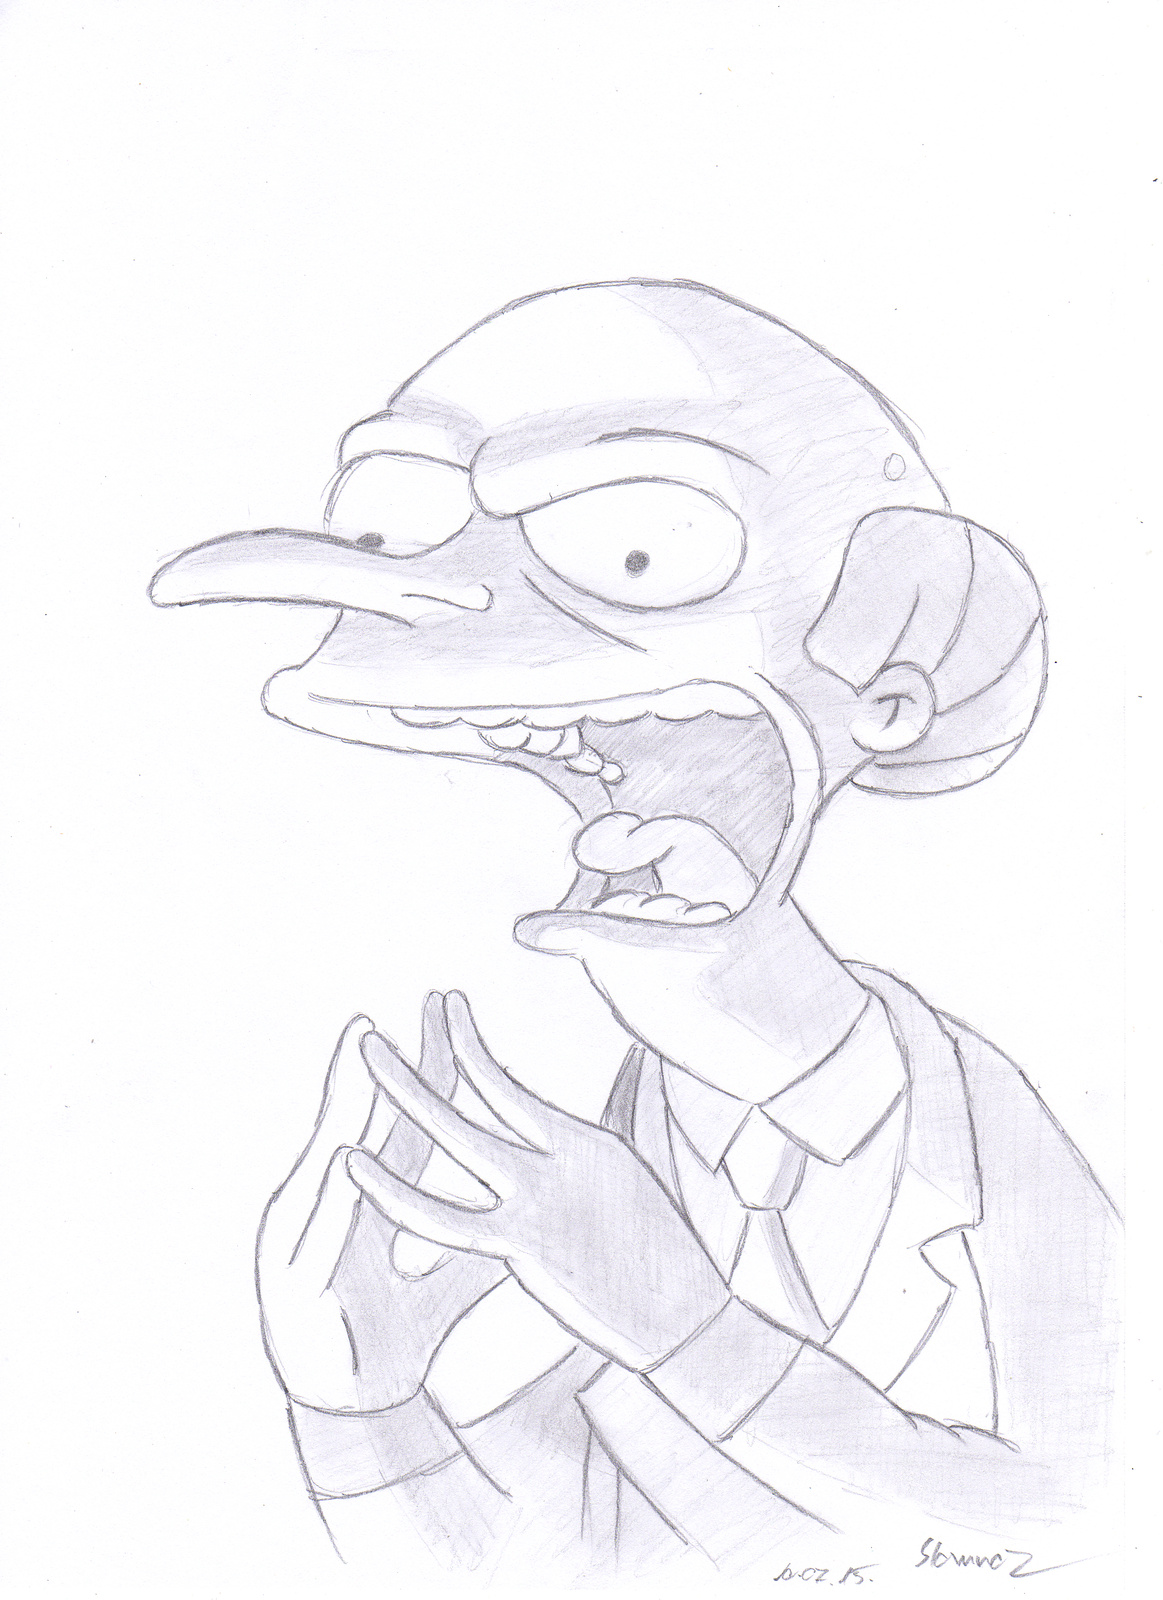 Mr. Burns Excellent...